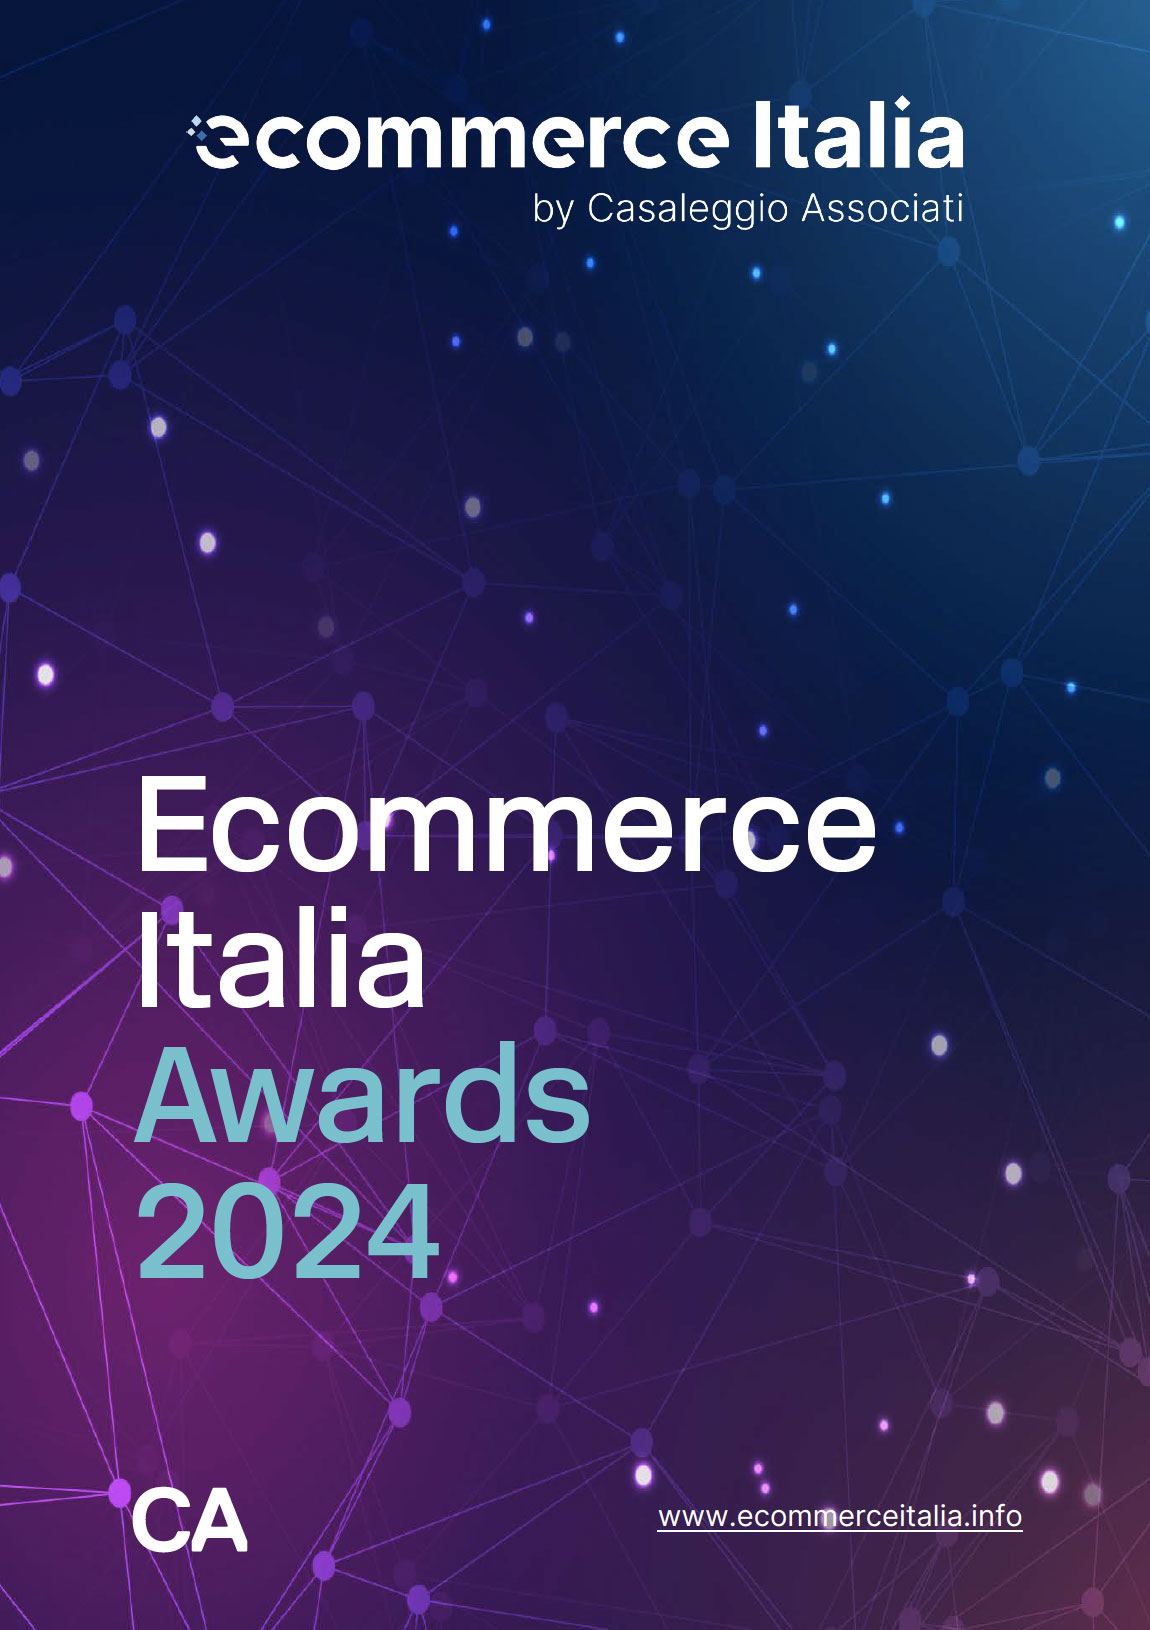 Ecommerce Italia Awards 2024 - Report